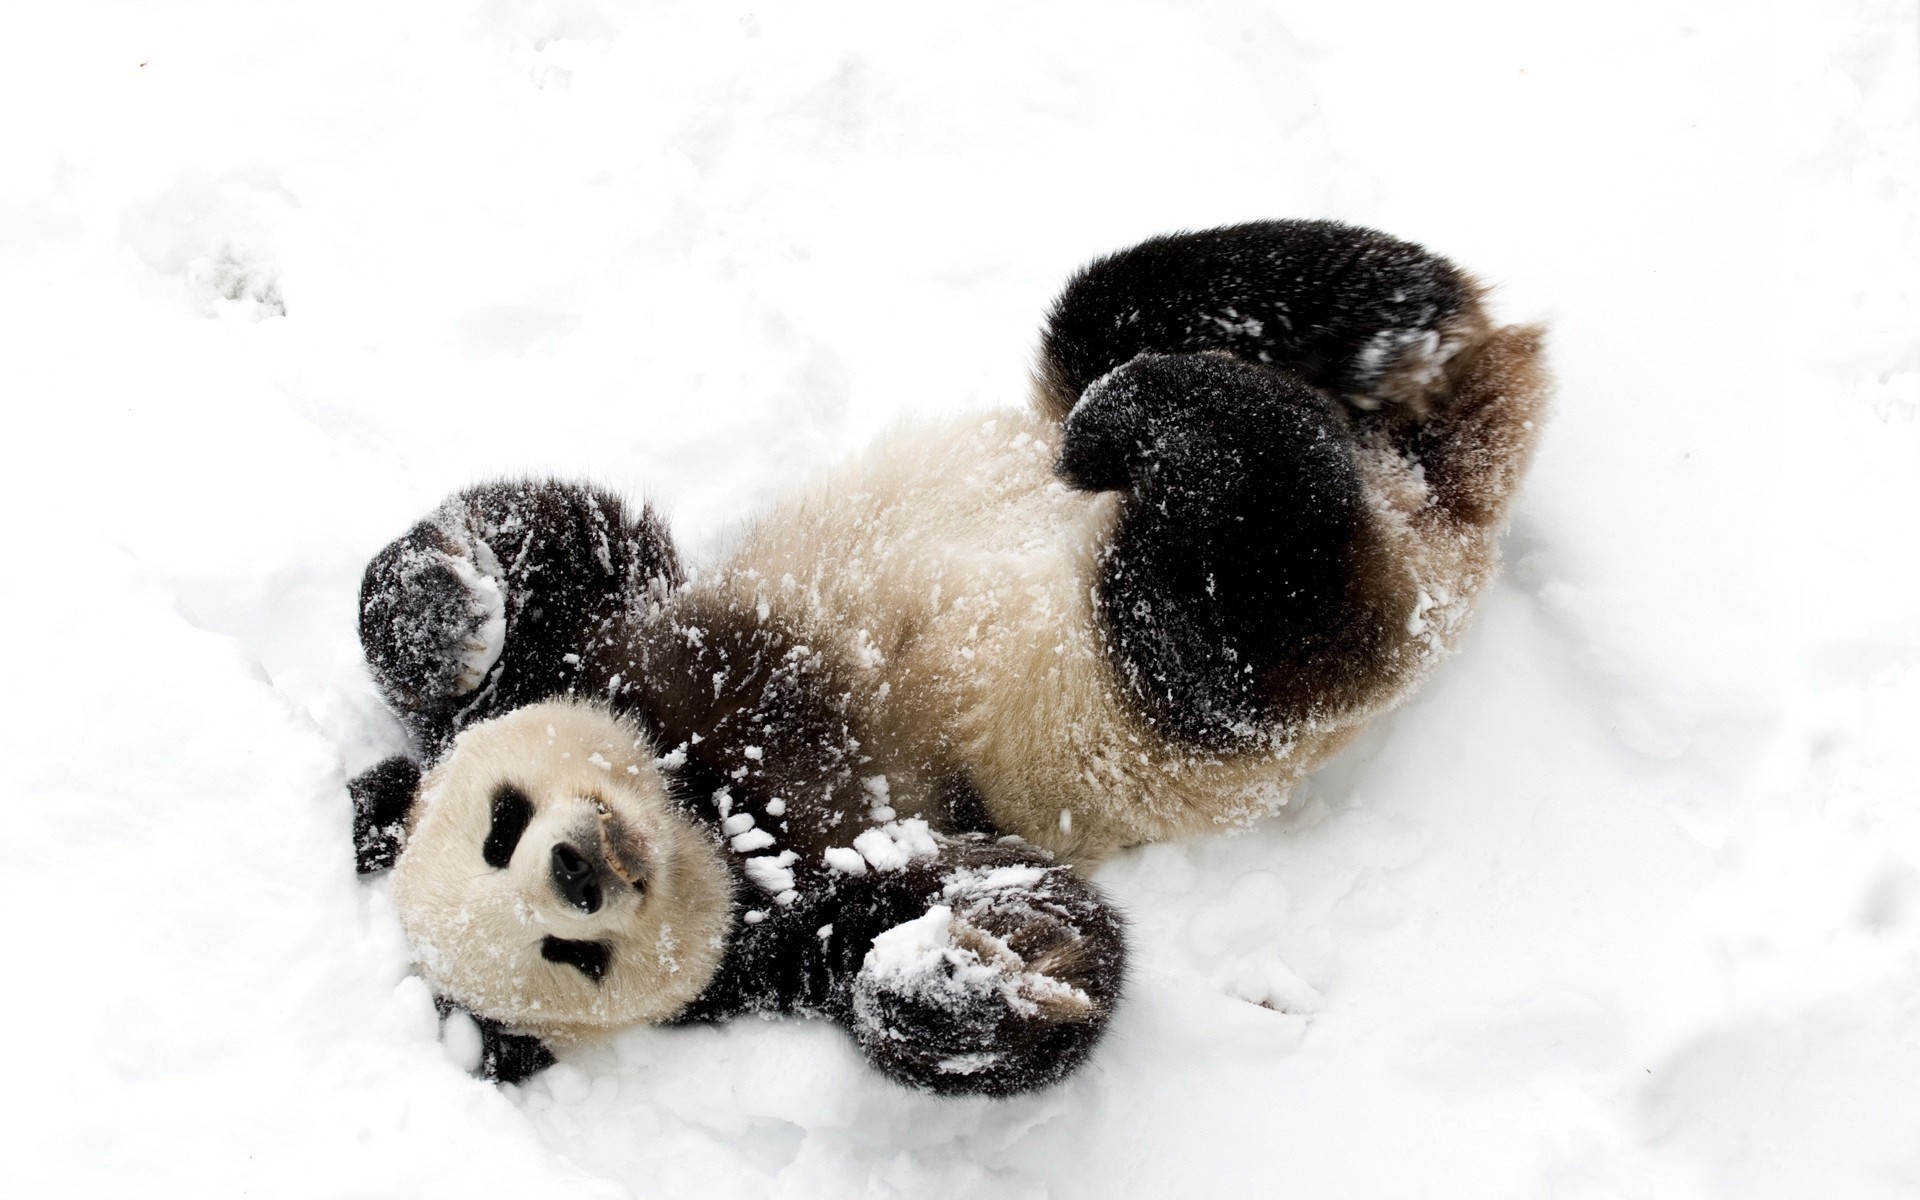 animals little snow winter desktop close-up panda bear baby panda